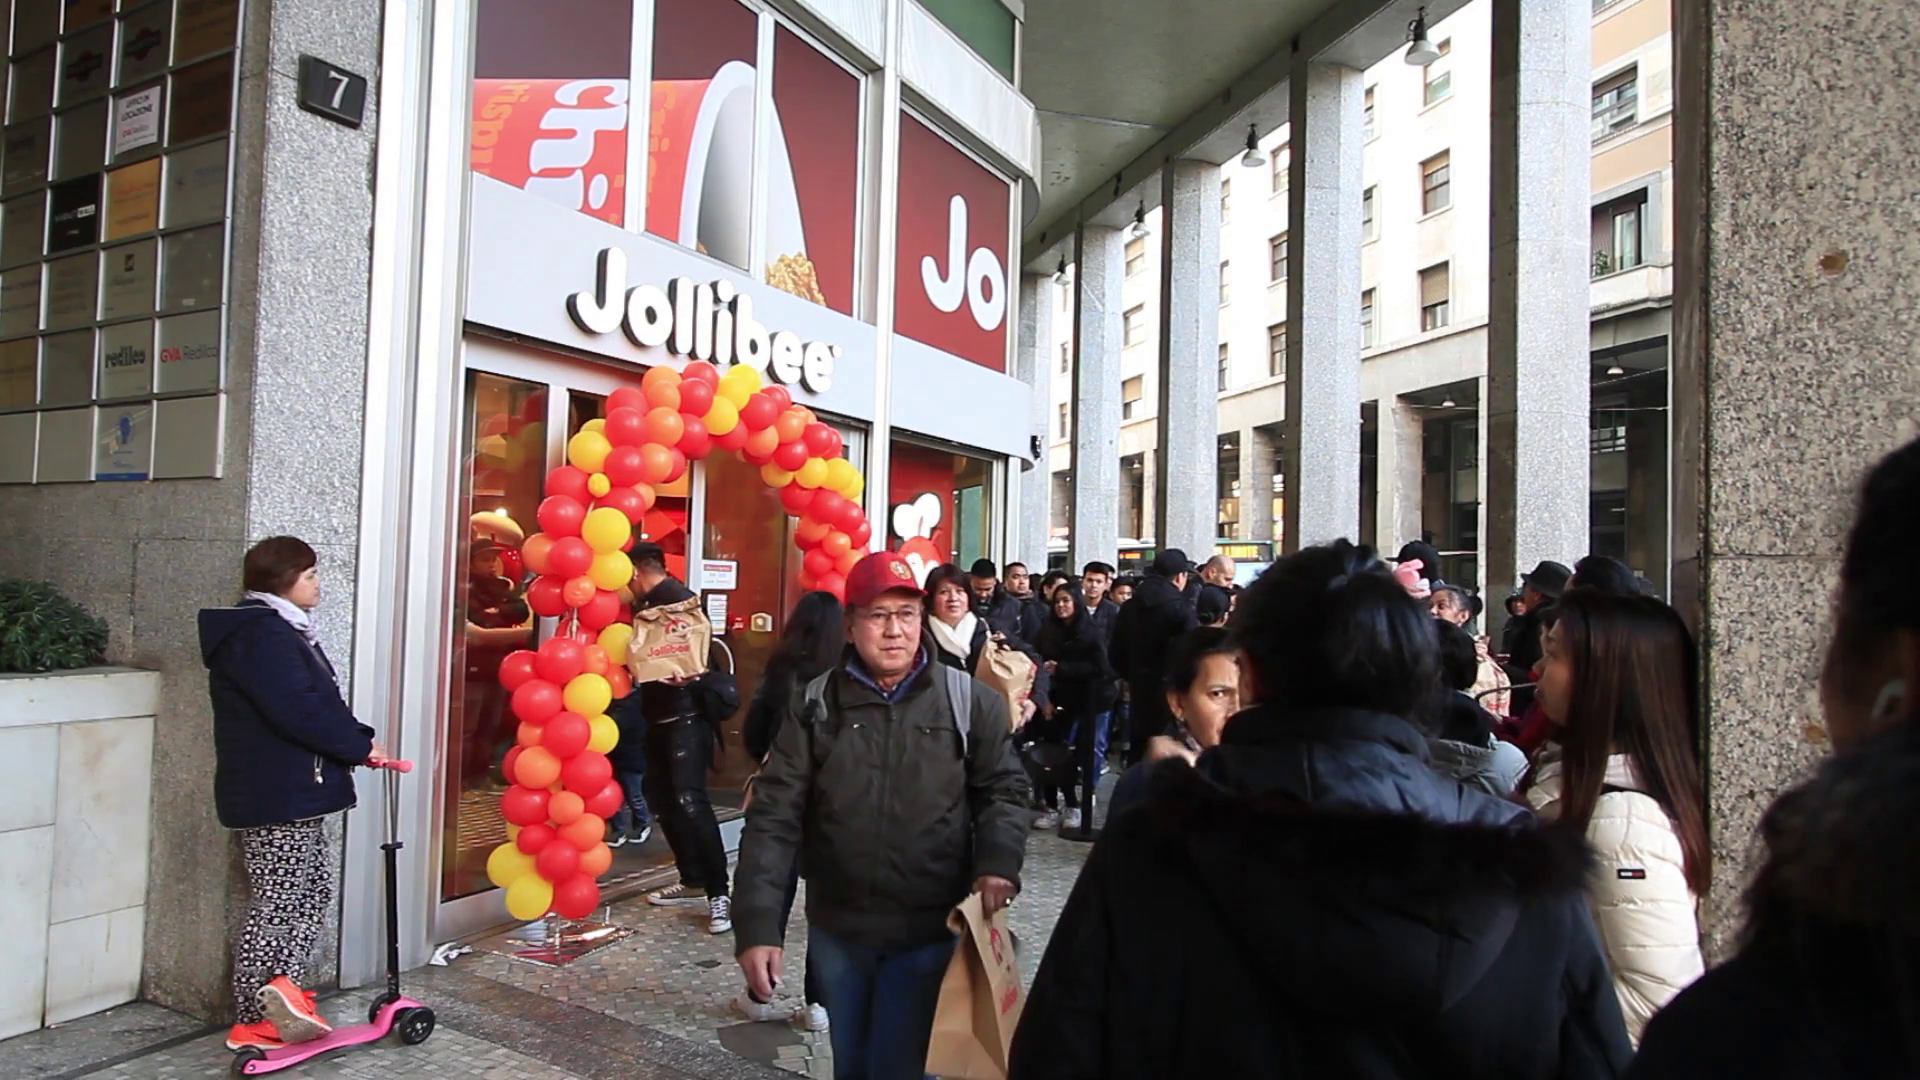 Jollibee Fast Food Opens Its First European Restaurant - Crowd , HD Wallpaper & Backgrounds